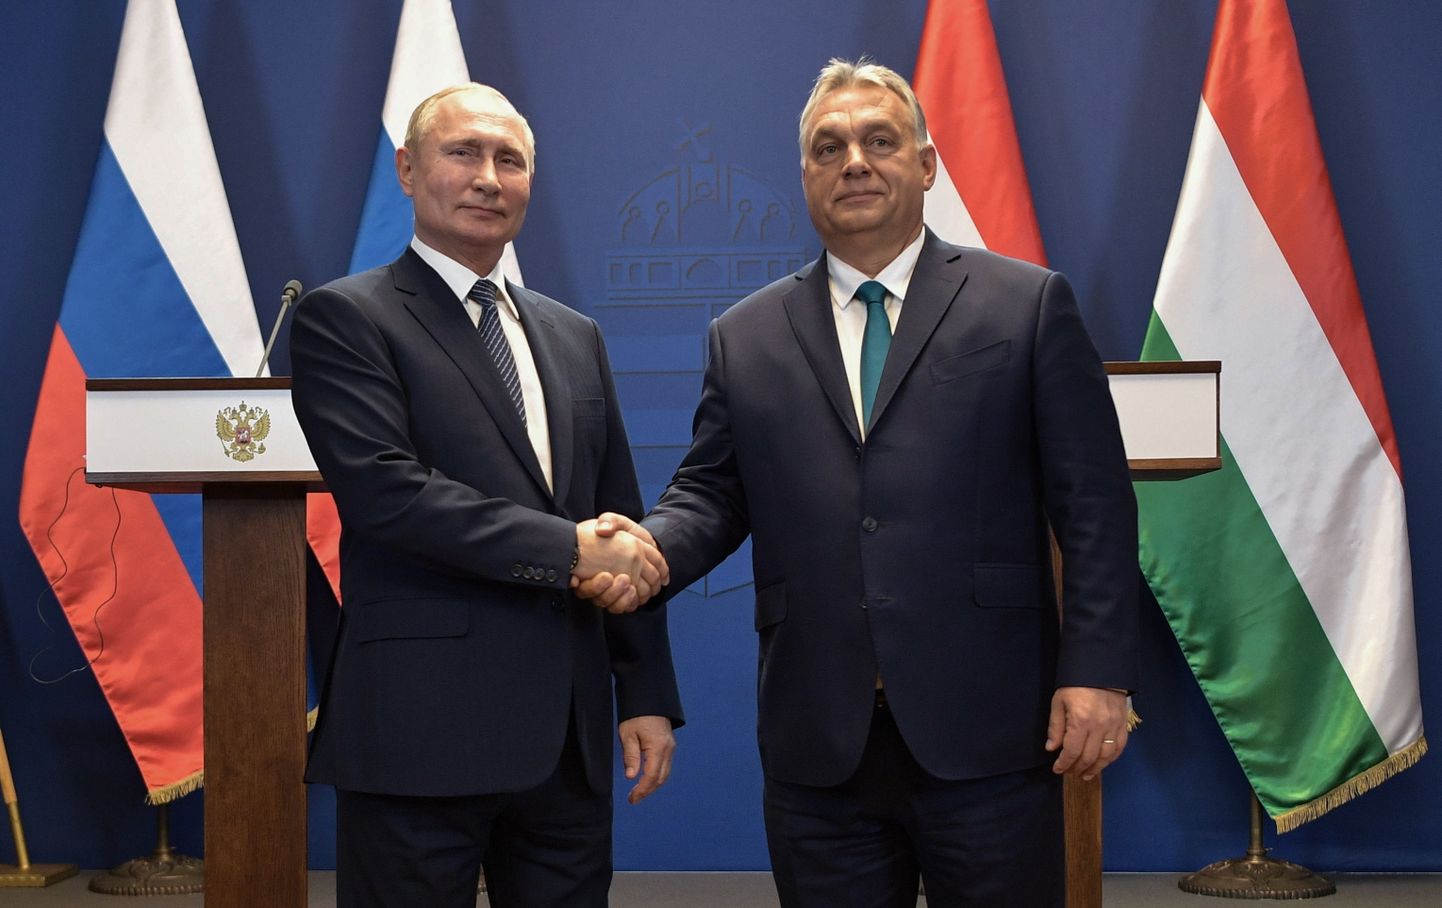 Владимир Путин (слева) и Виктор Орбан (справа) в Будапеште.